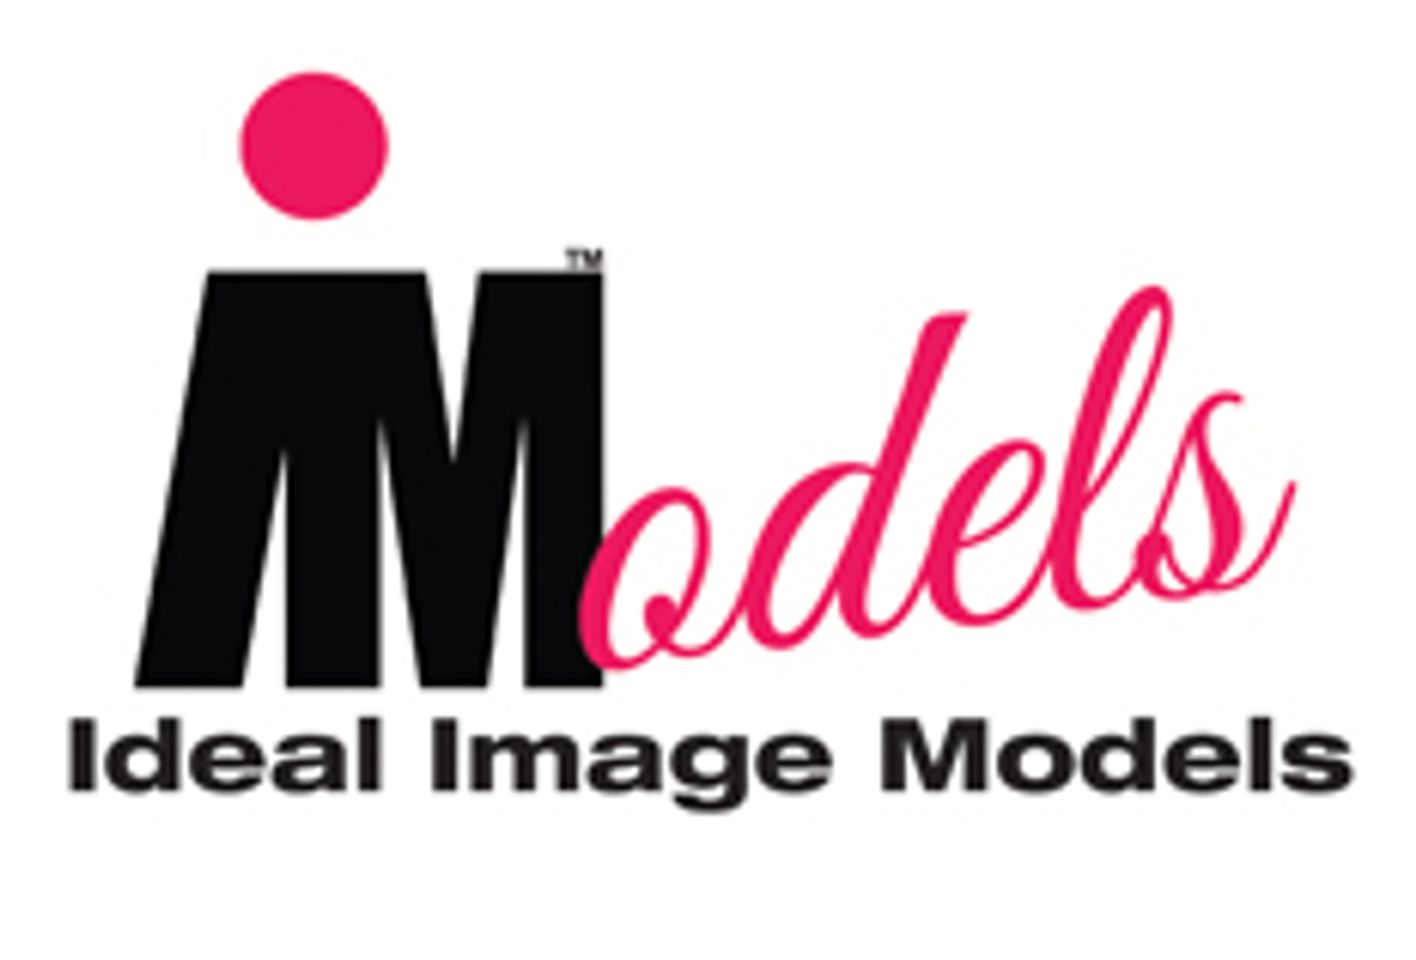 Ideal Image Models Hosting Party On June 13